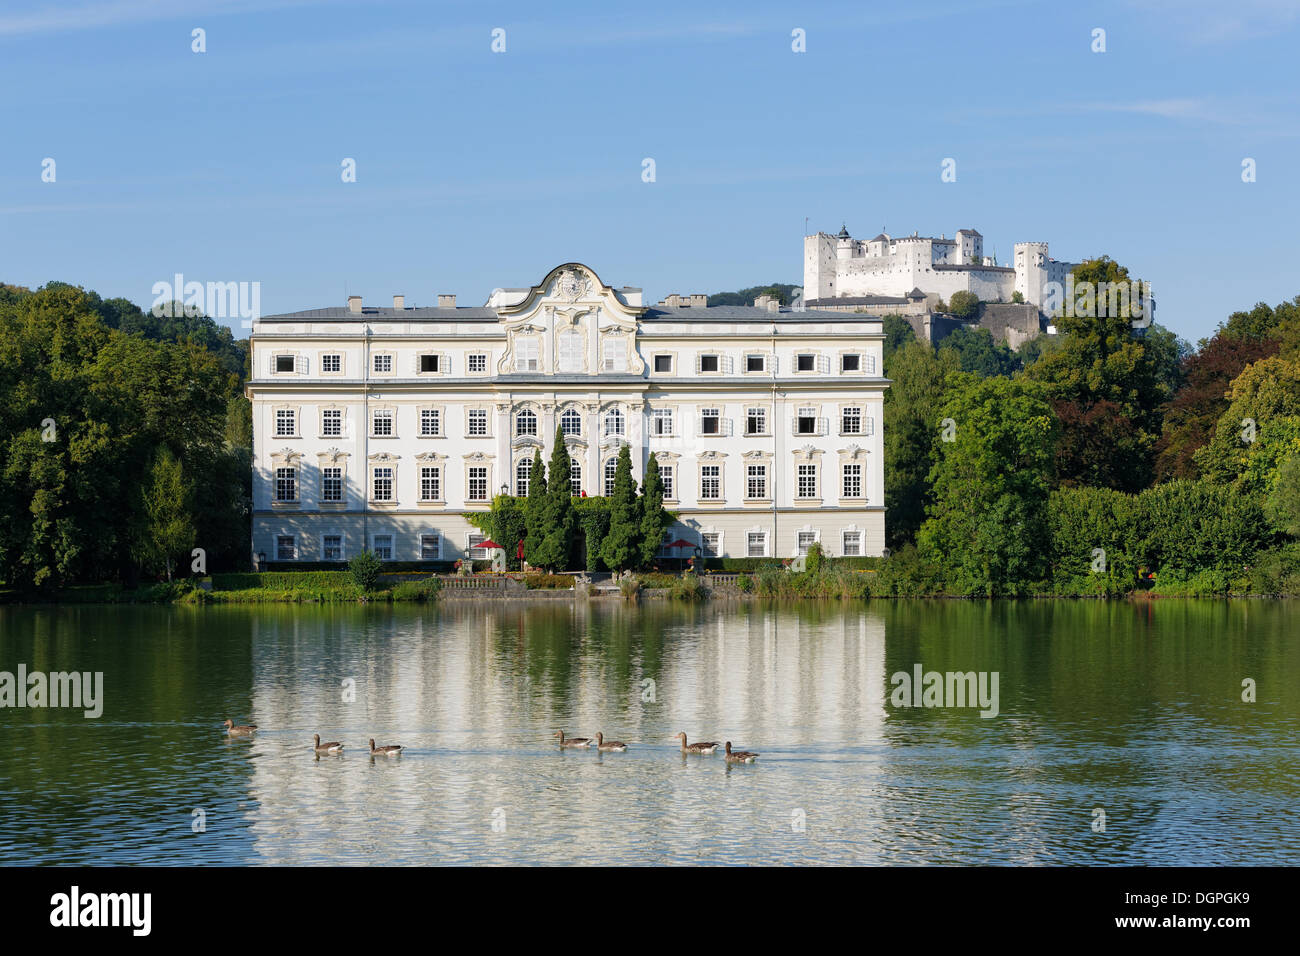 Leopoldskron Palace, Leopoldskroner Teich pond, Hohensalzburg Castle at the back, Salzburg, Austria, Europe, PublicGround Stock Photo